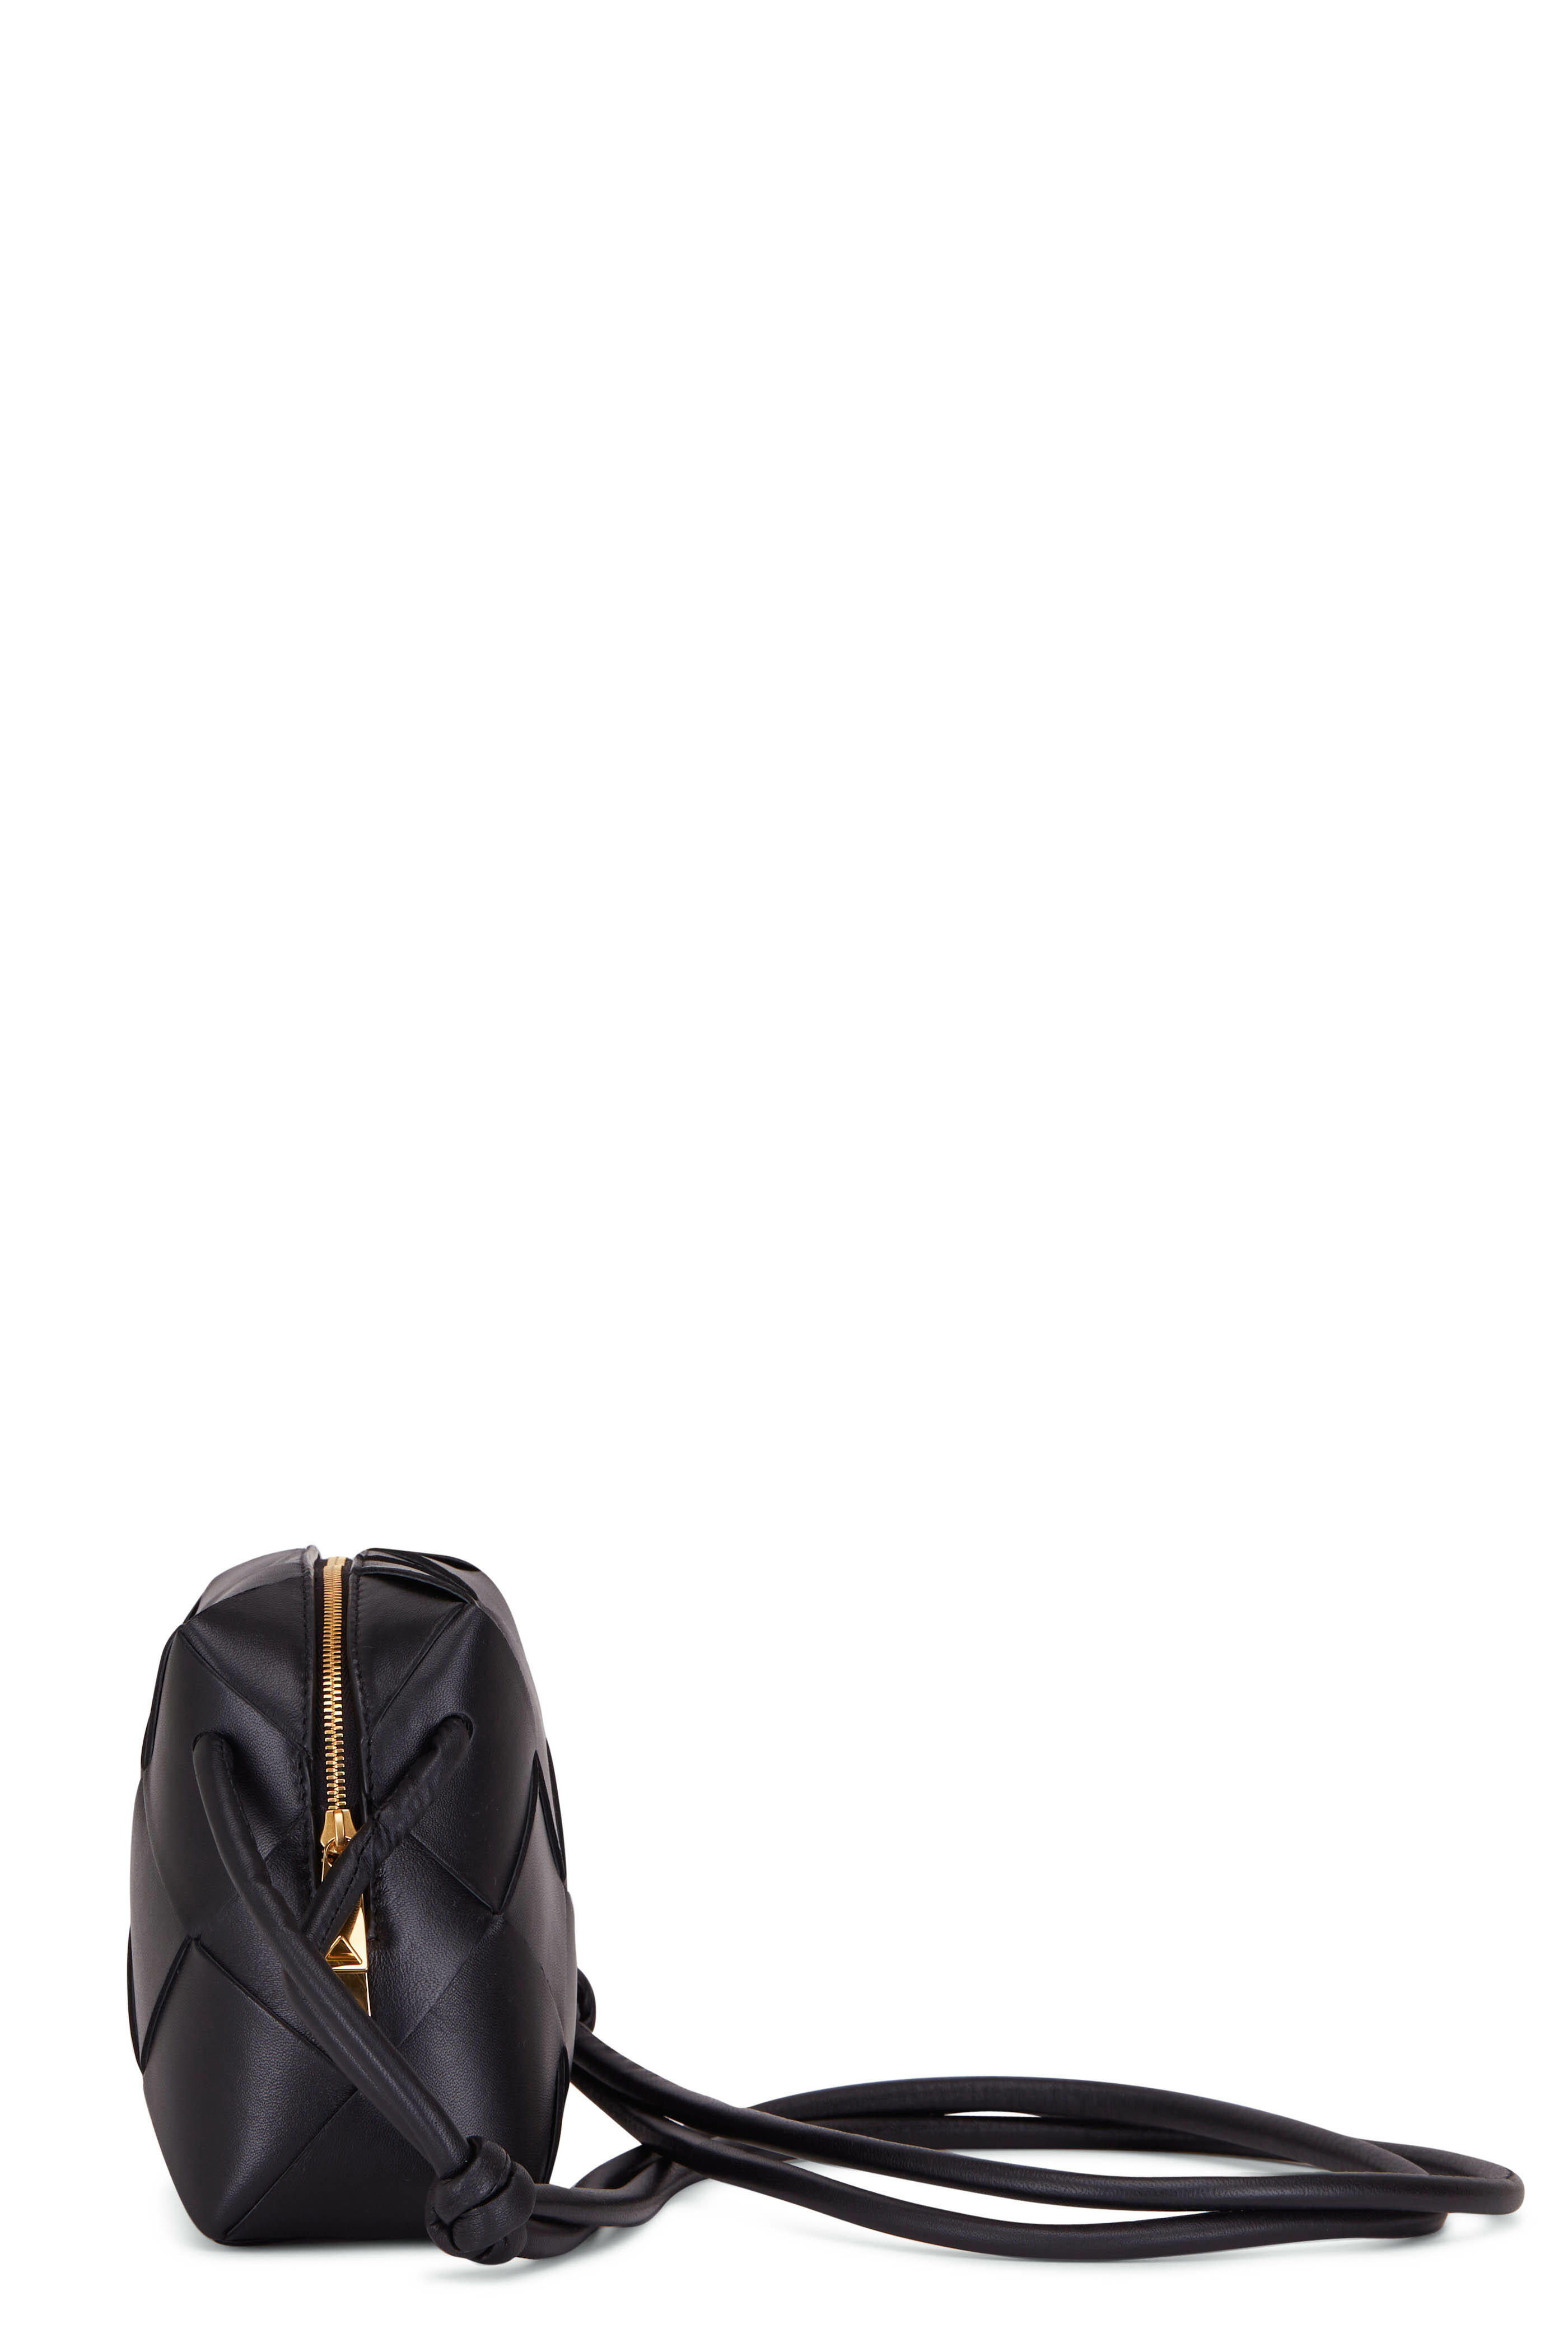 Bottega Veneta® Mini Loop Camera Bag in Black. Shop online now.